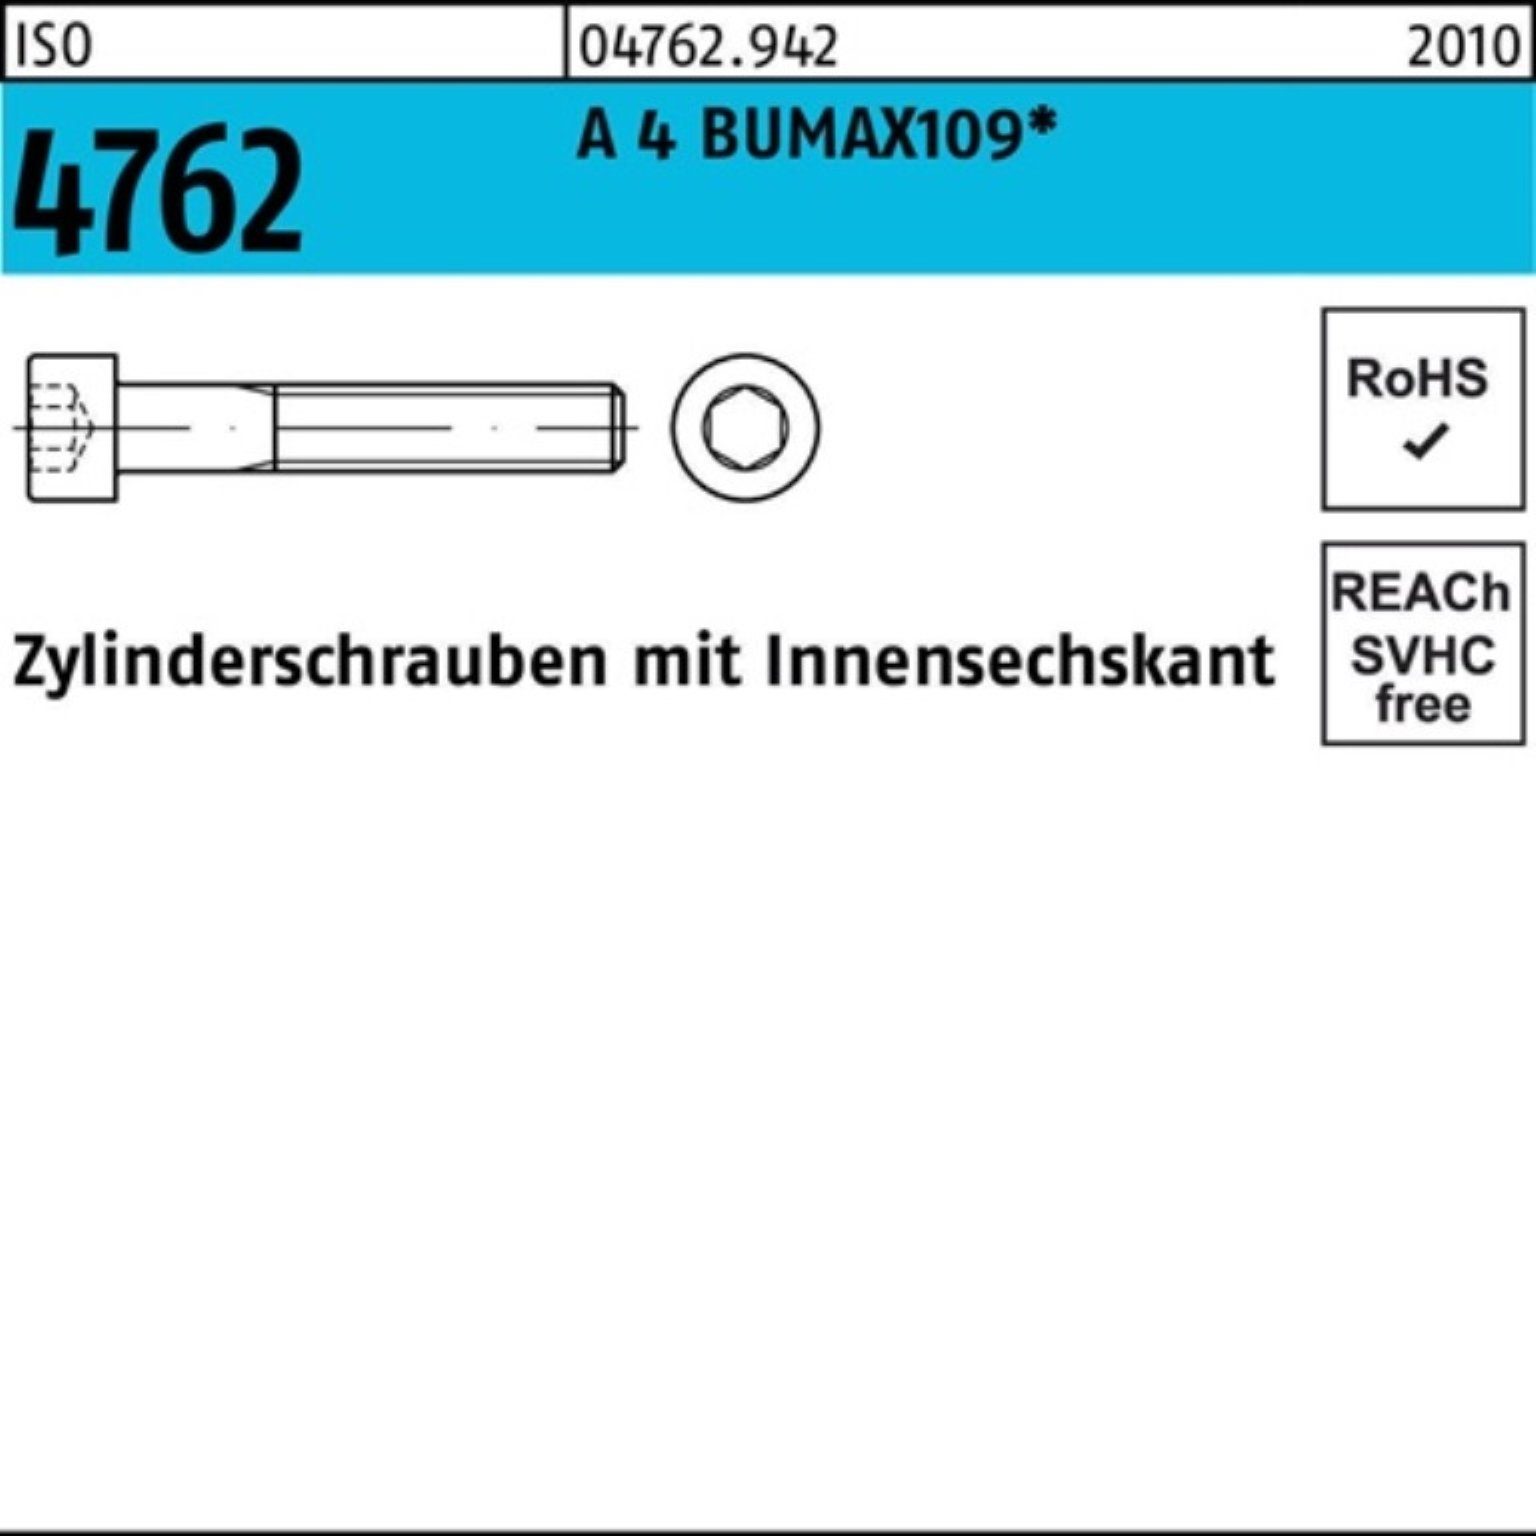 Bufab Zylinderschraube 100er Pack Zylinderschraube ISO 4762 Innen-6kt M10x 70 A 4 BUMAX109 50